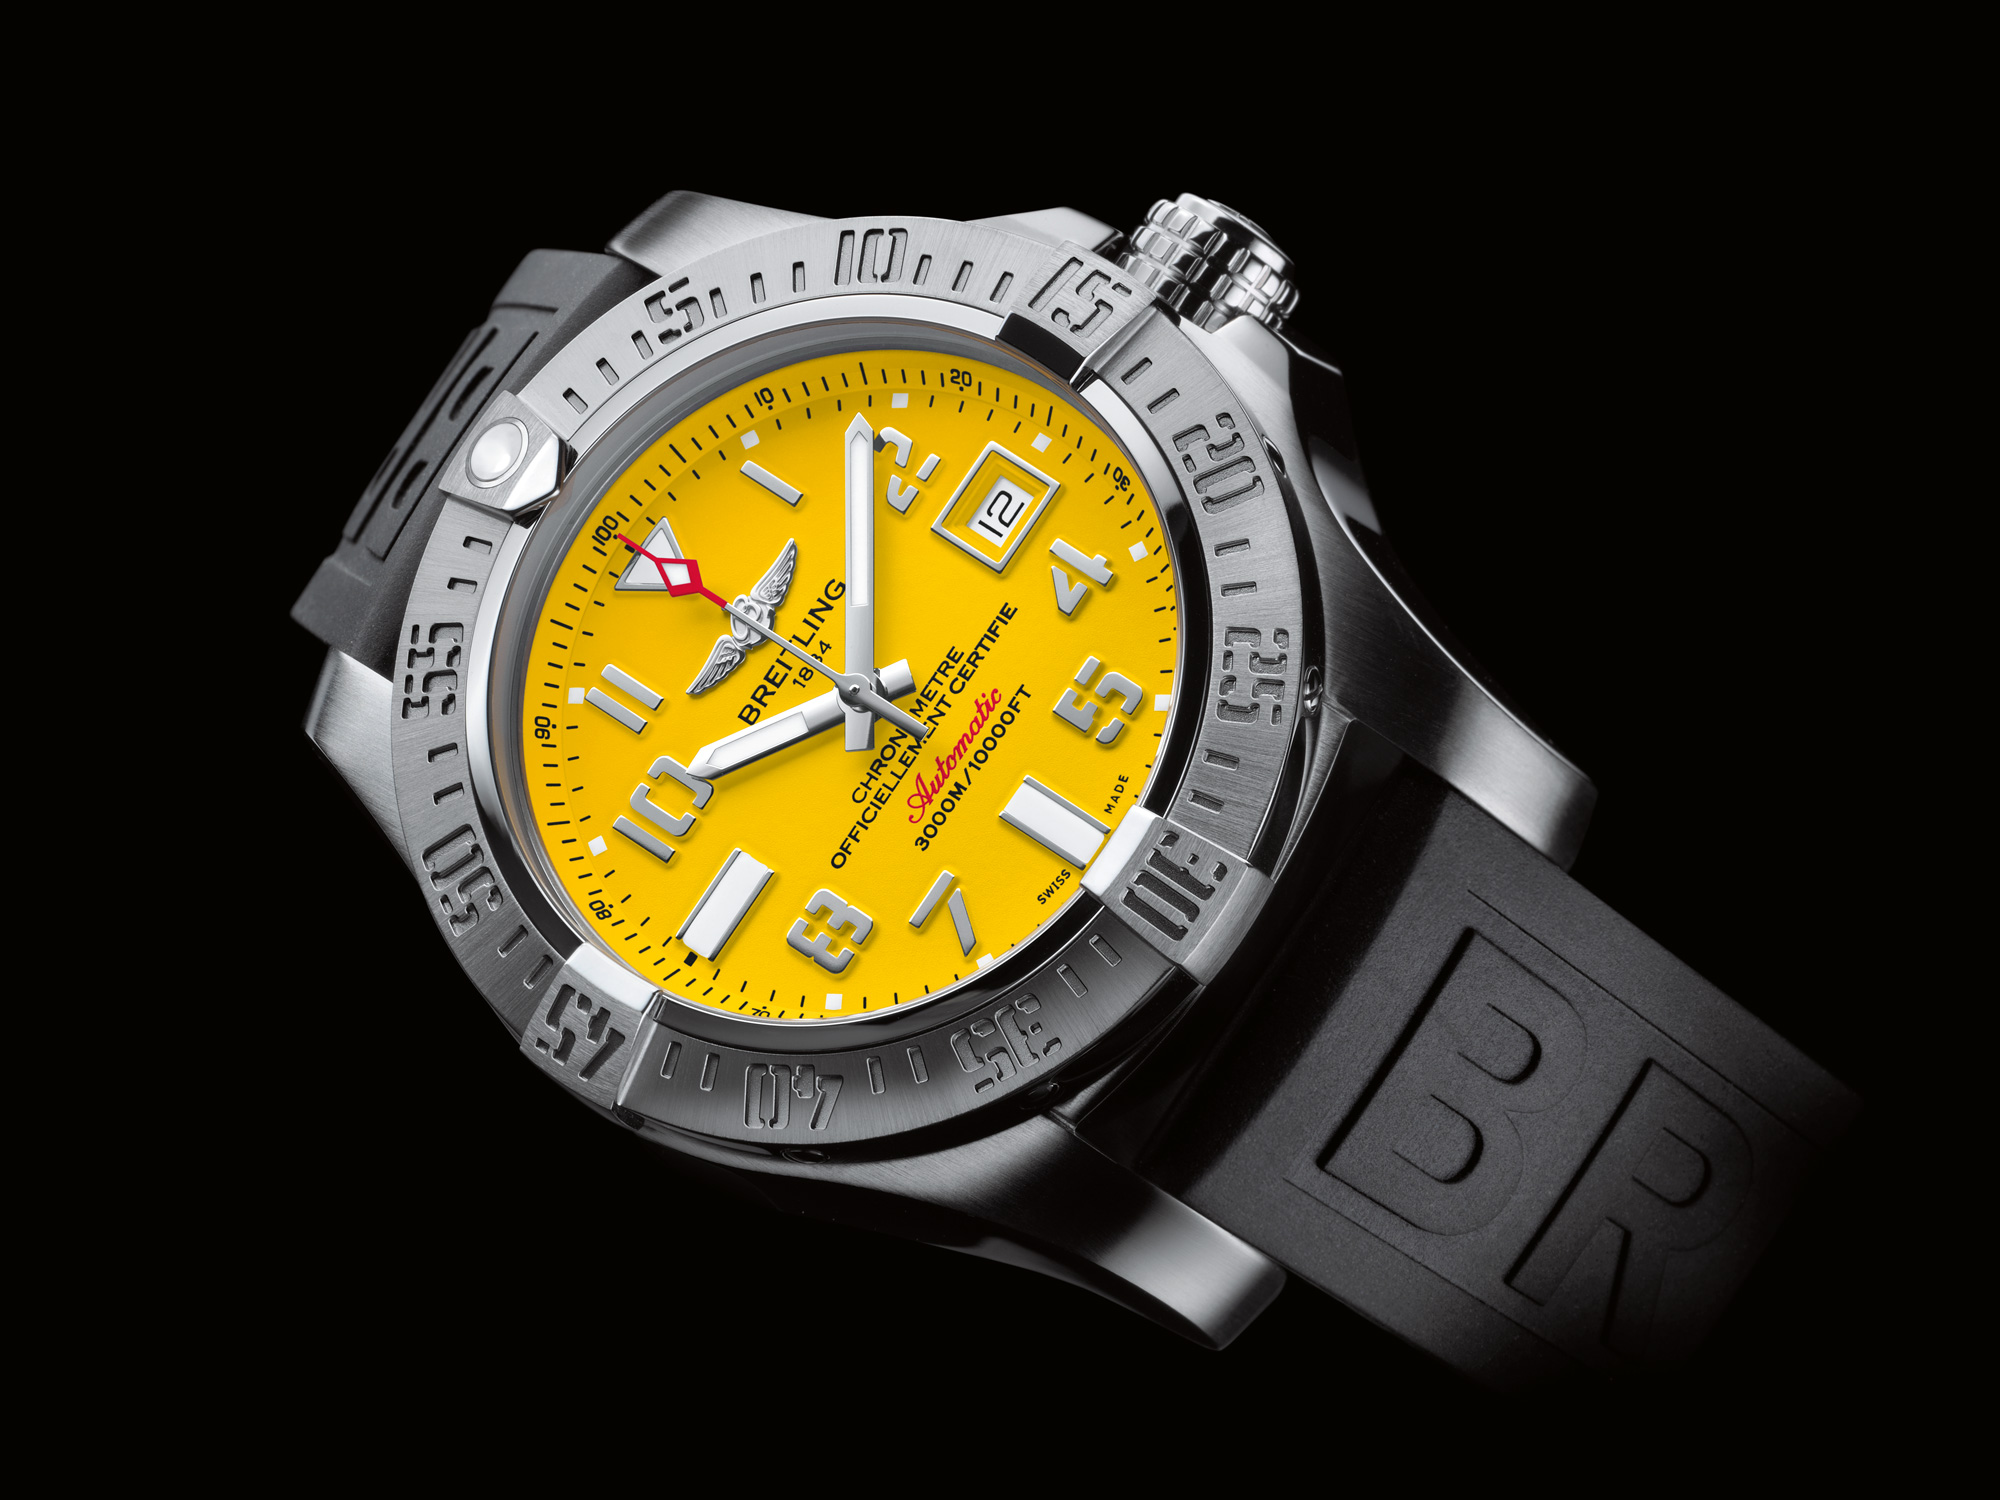 Replica Rolex Watches On Ebay